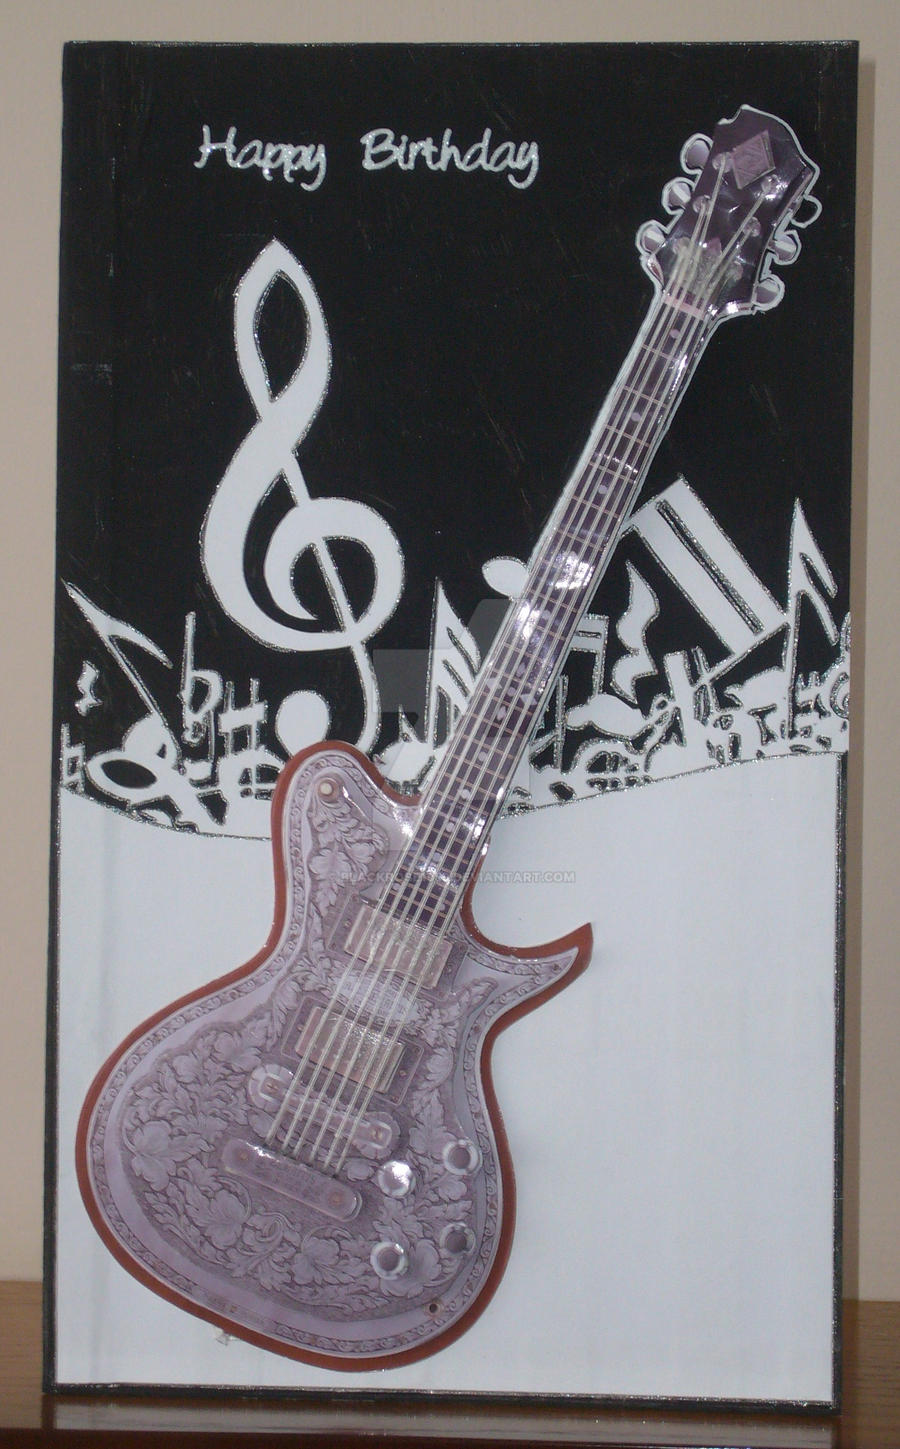 steve-s-guitar-birthday-card-by-blackrose1959-on-deviantart